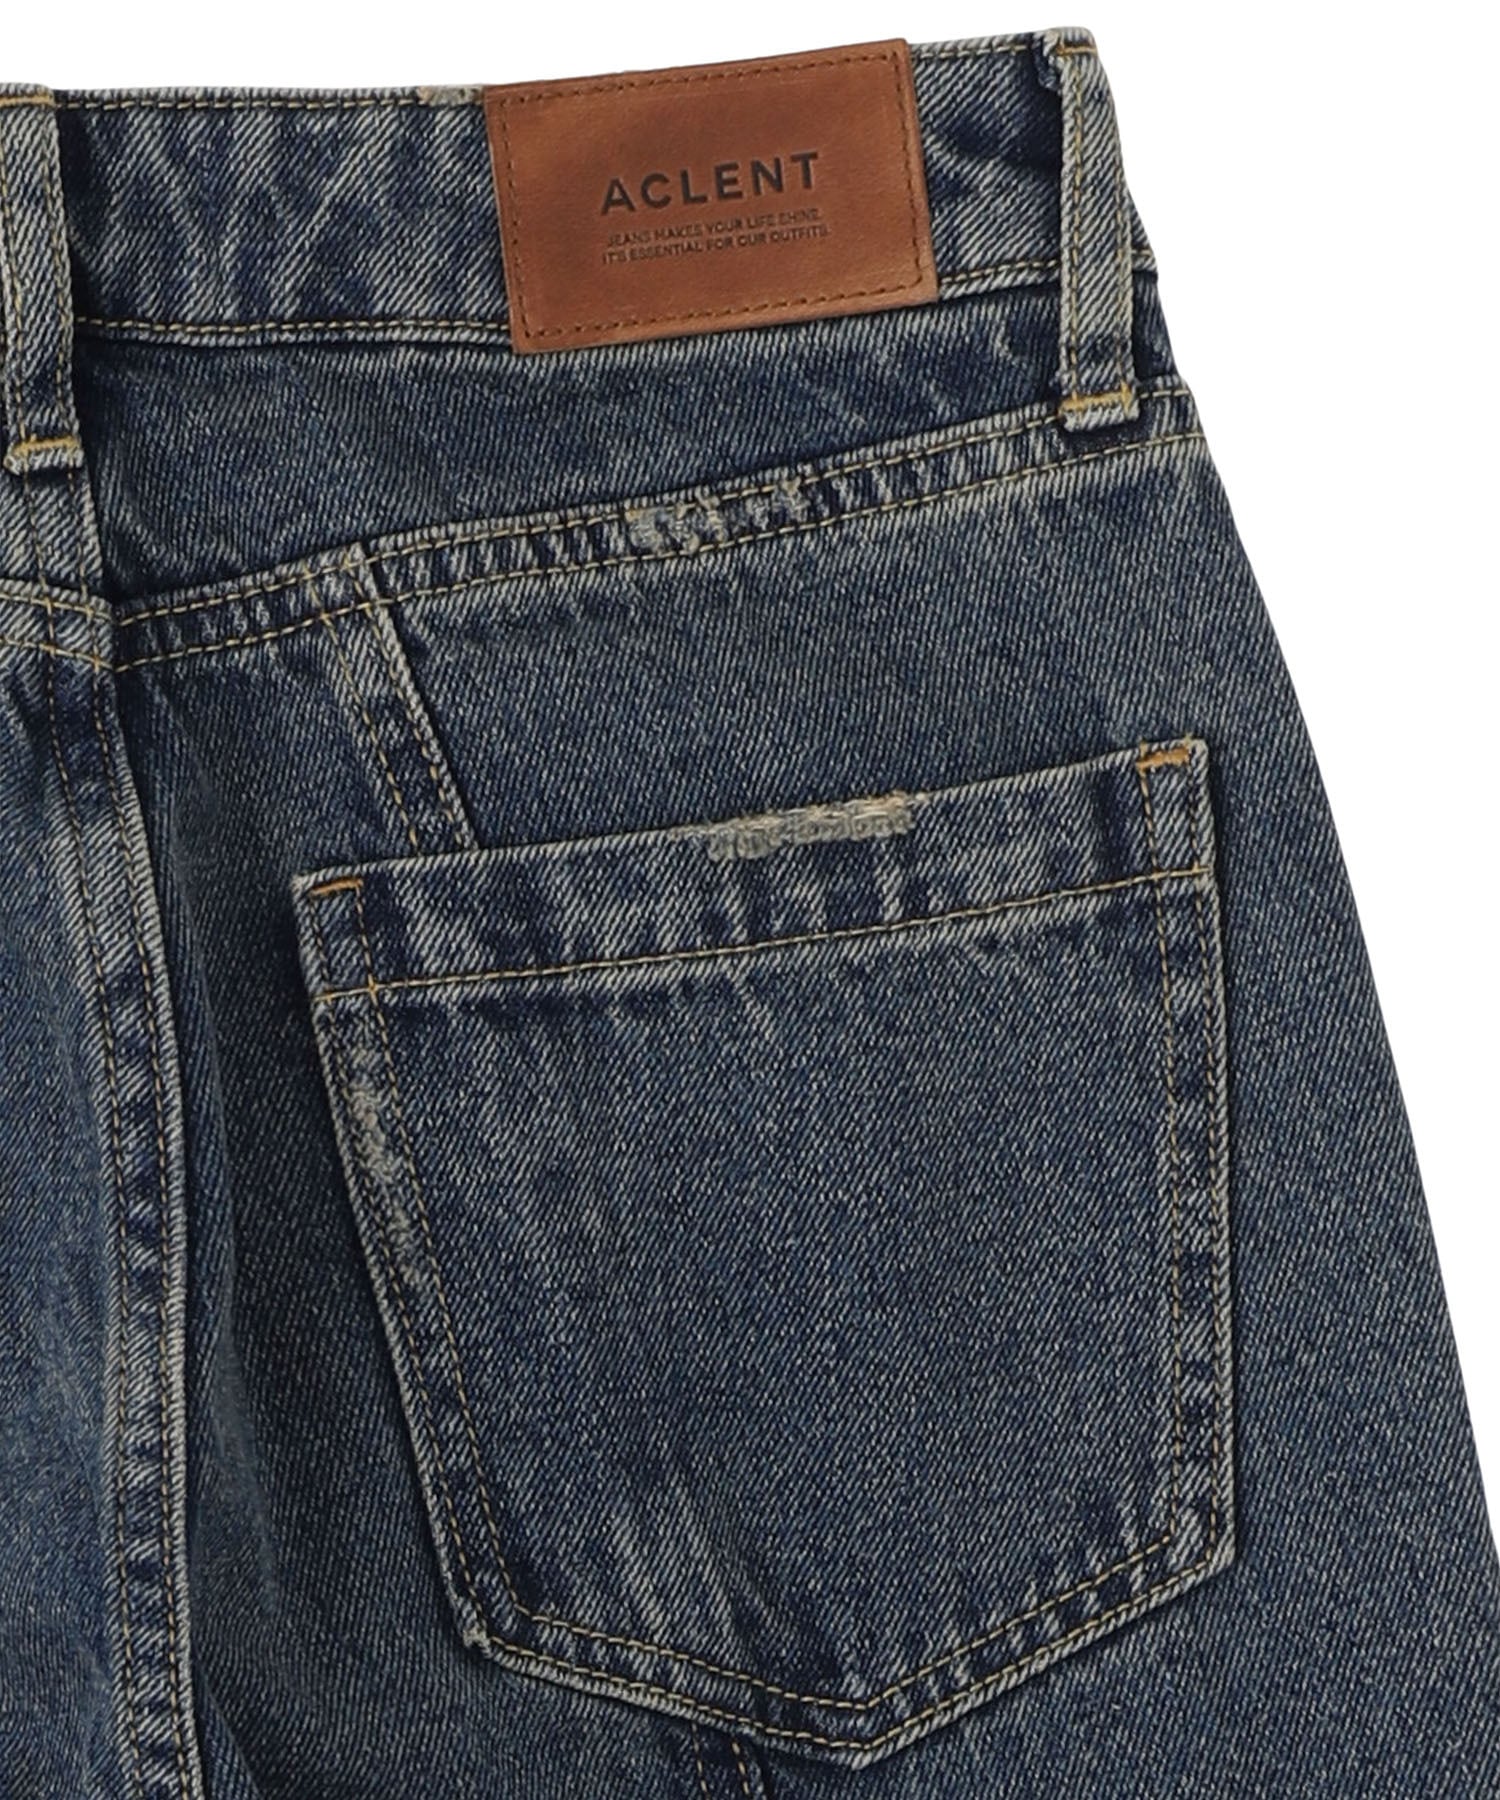 Switching slit vintage jeans